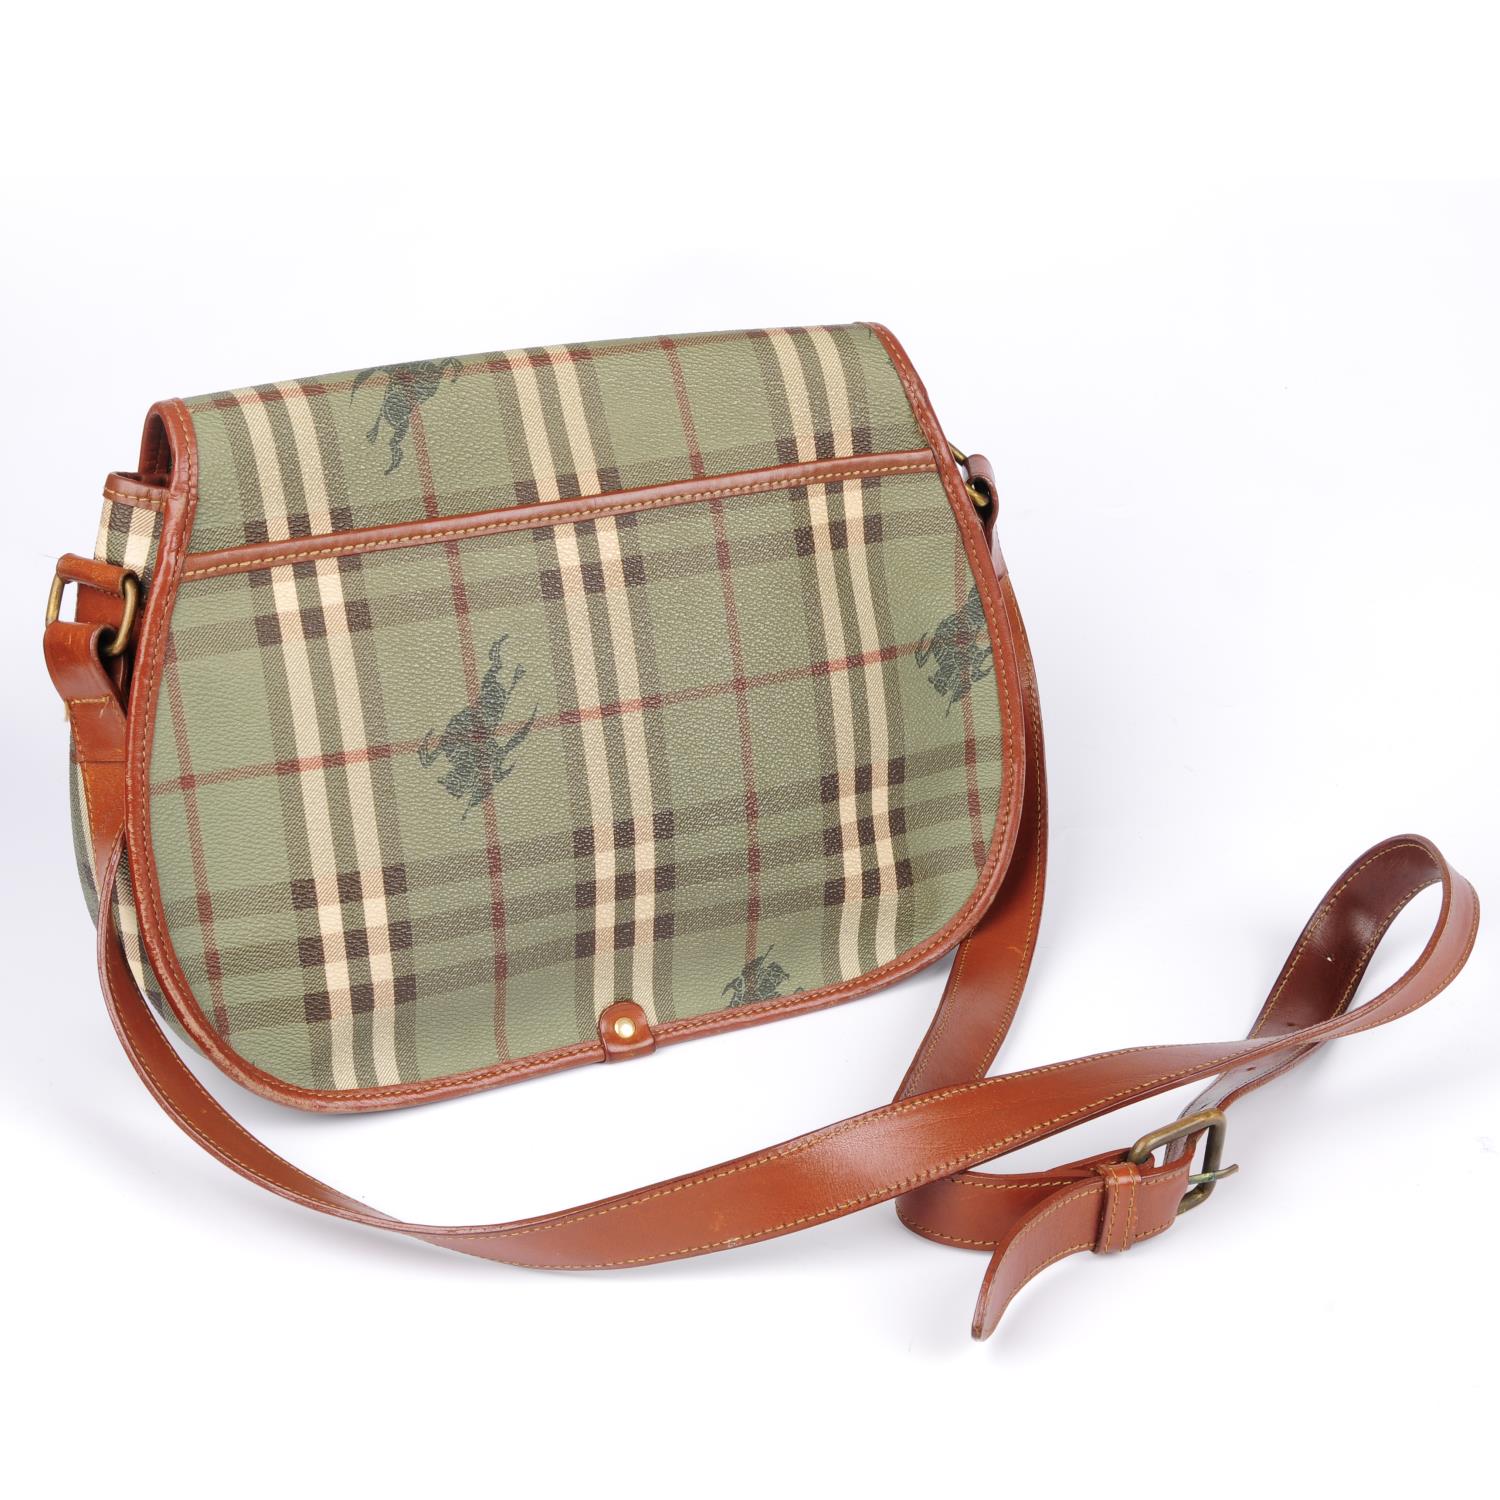 BURBERRY - a green Haymarket Check handbag. - Image 2 of 4